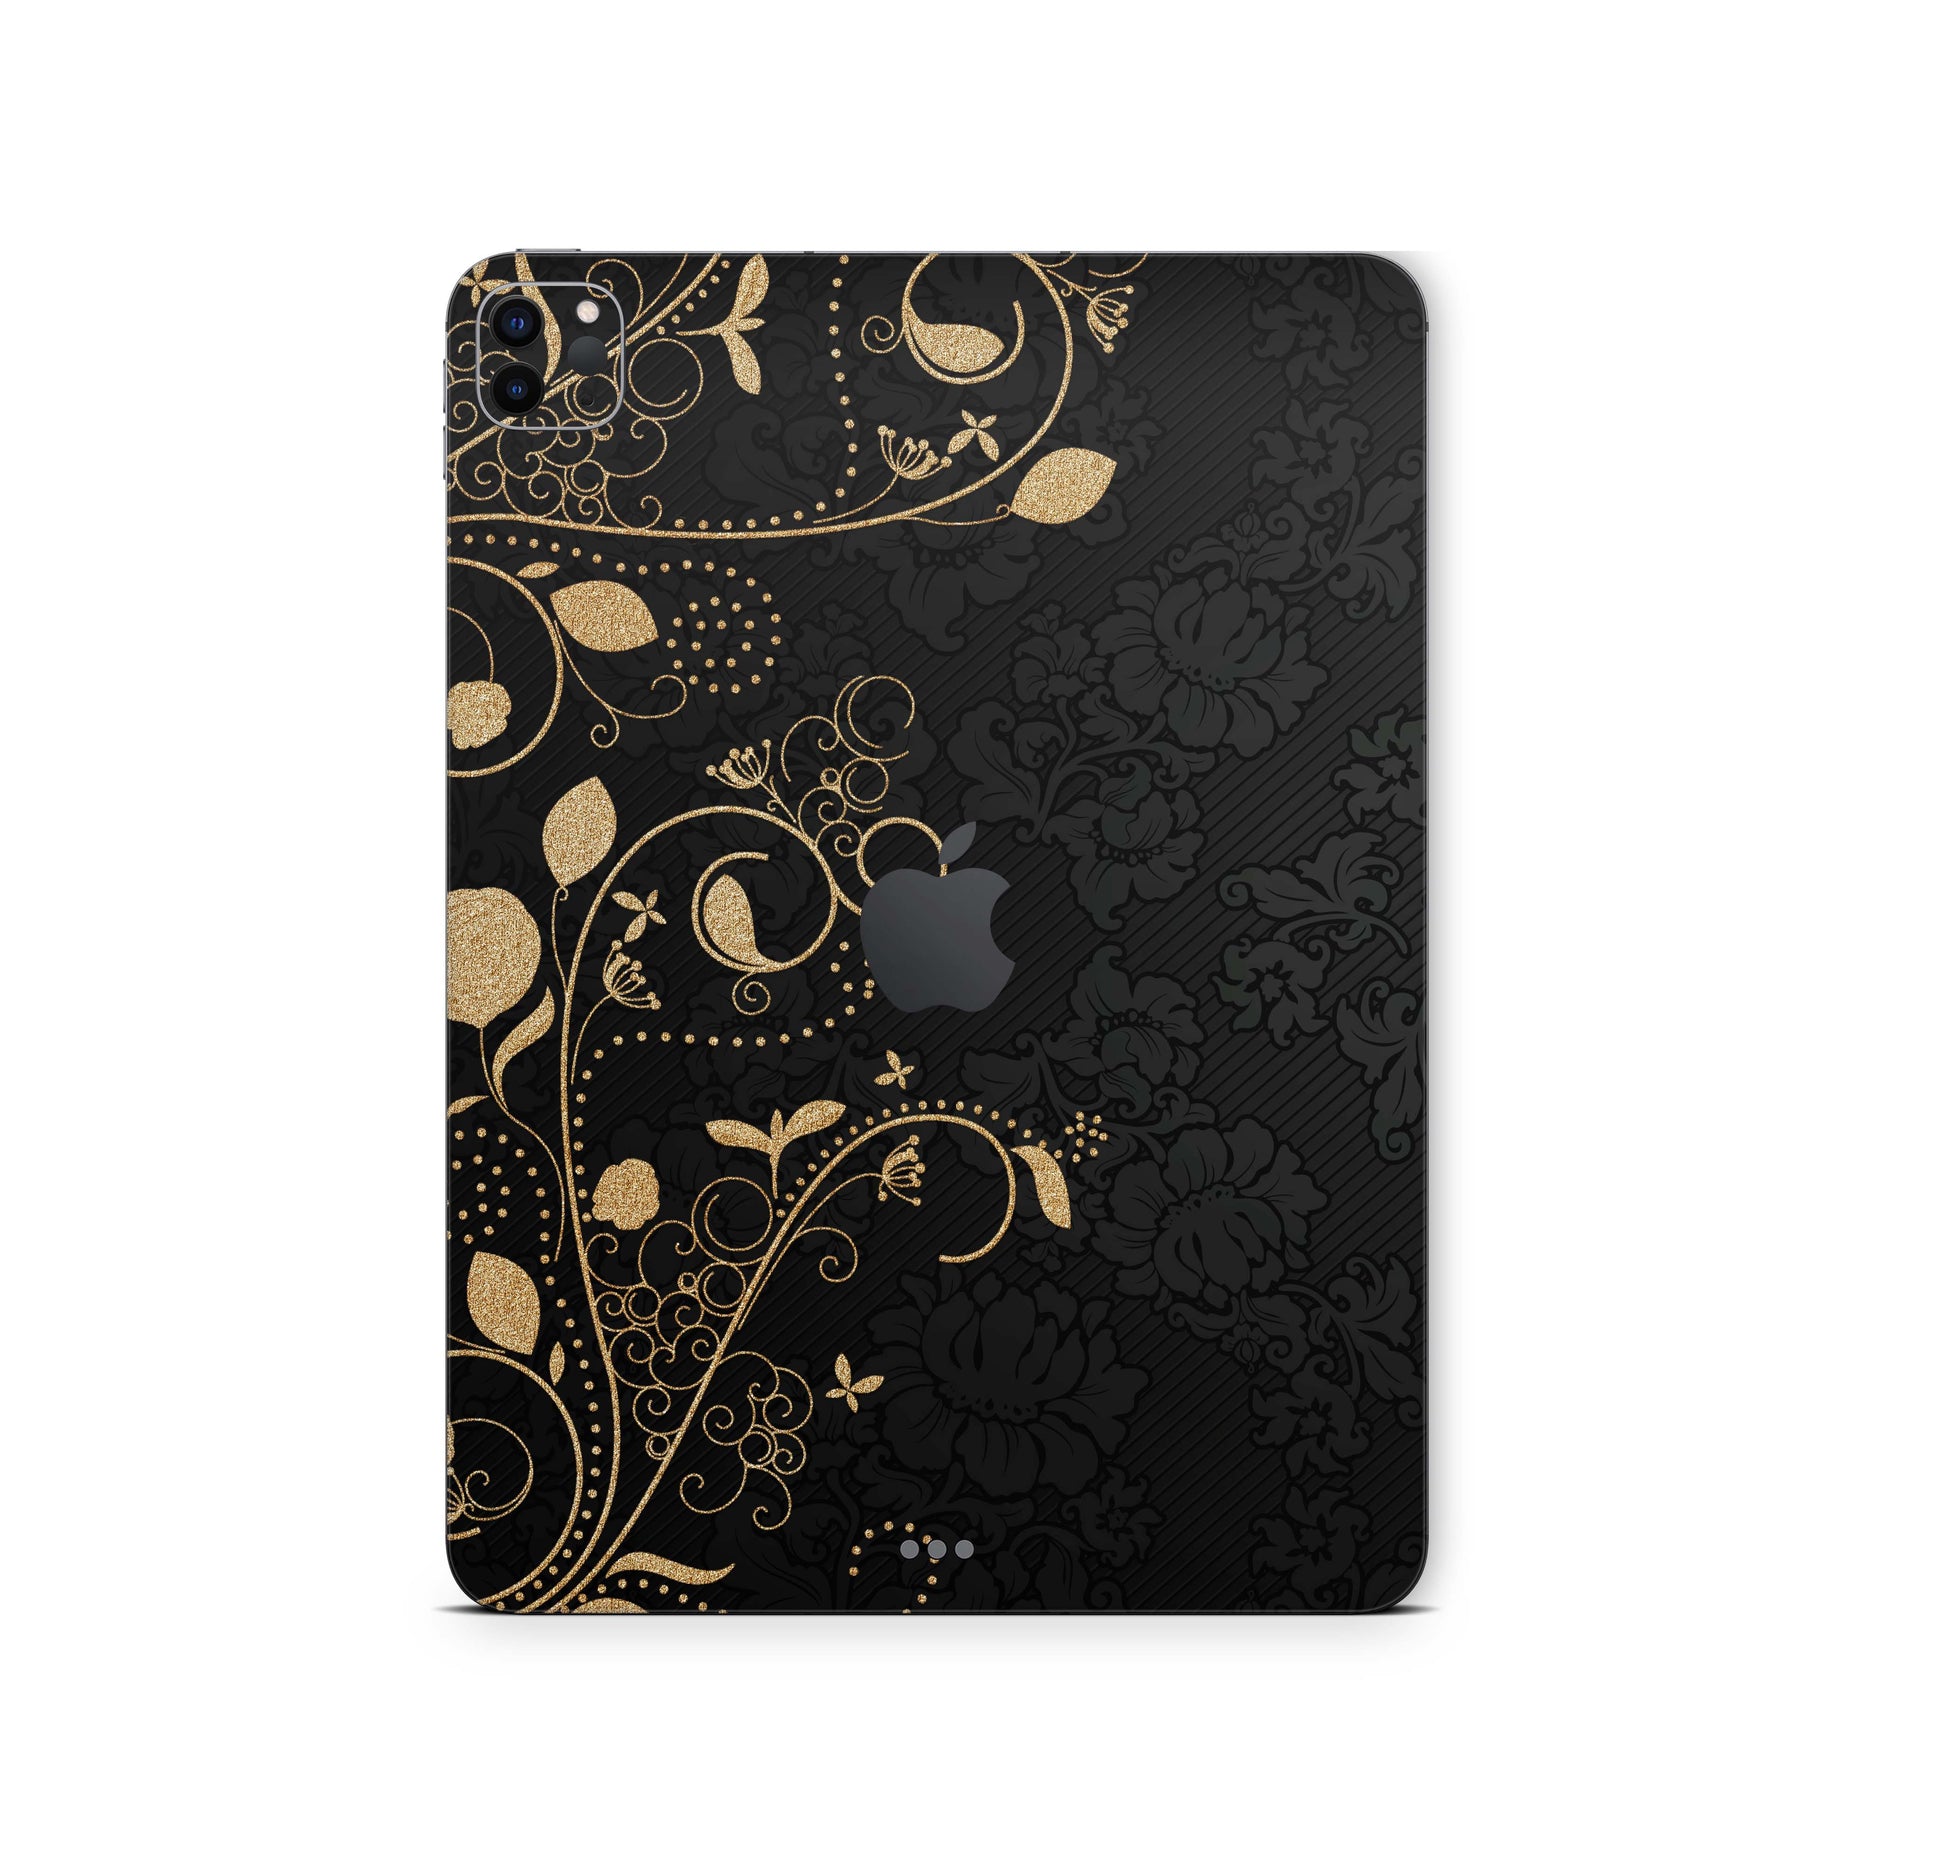 iPad Pro Skin 11" 3.Generation M1 2021 Design Cover Folie Vinyl Skins & Wraps Aufkleber Skins4u Darkmoon  